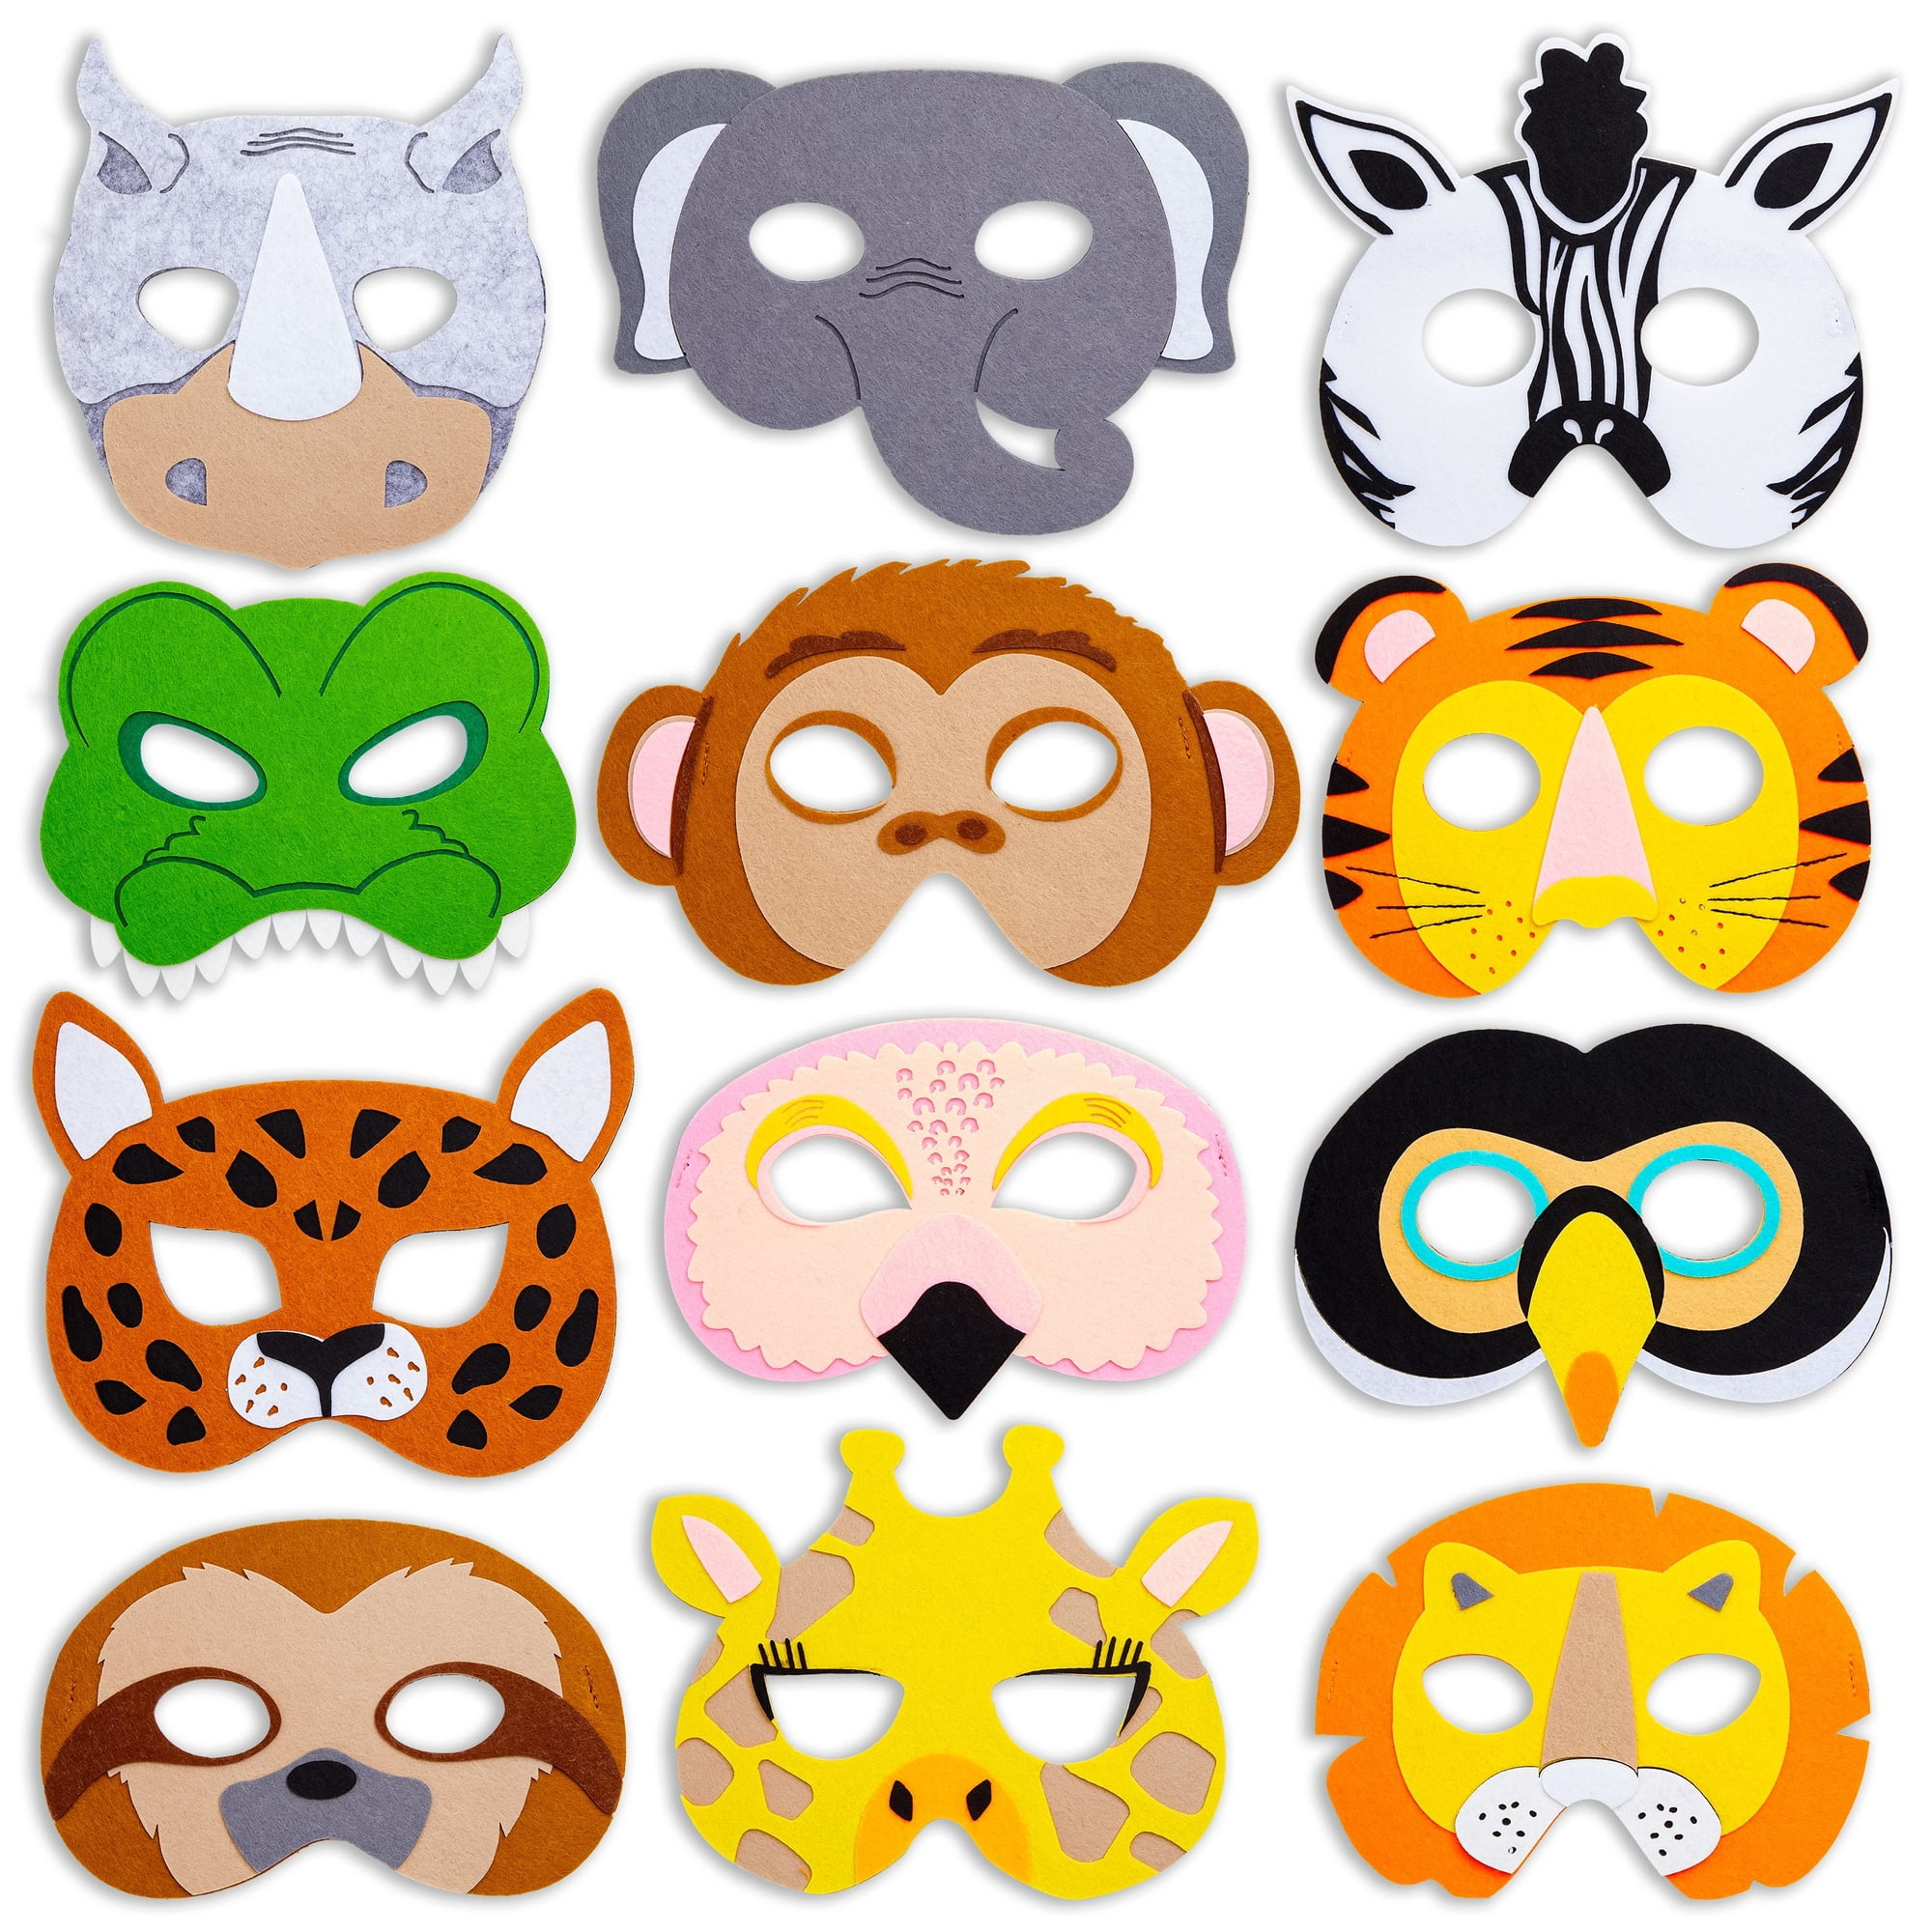 10 printable wild animal masks  Animal masks, Carnival crafts